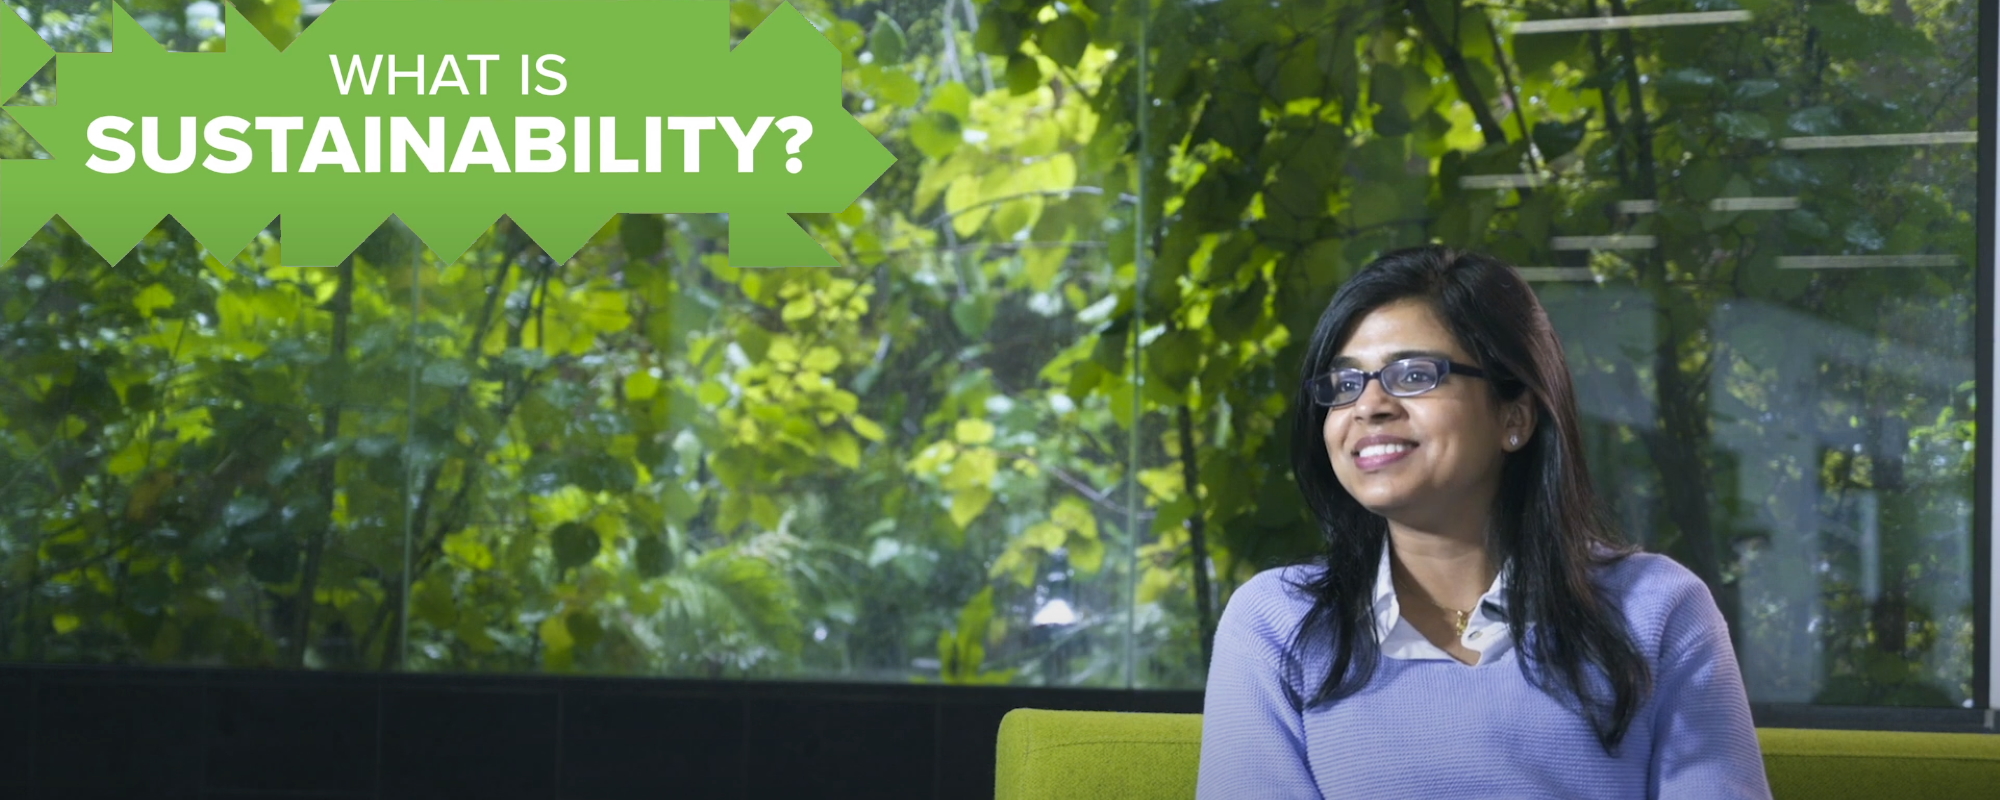 Video still:  Dr Shalini Divya talking, with a leafy background.